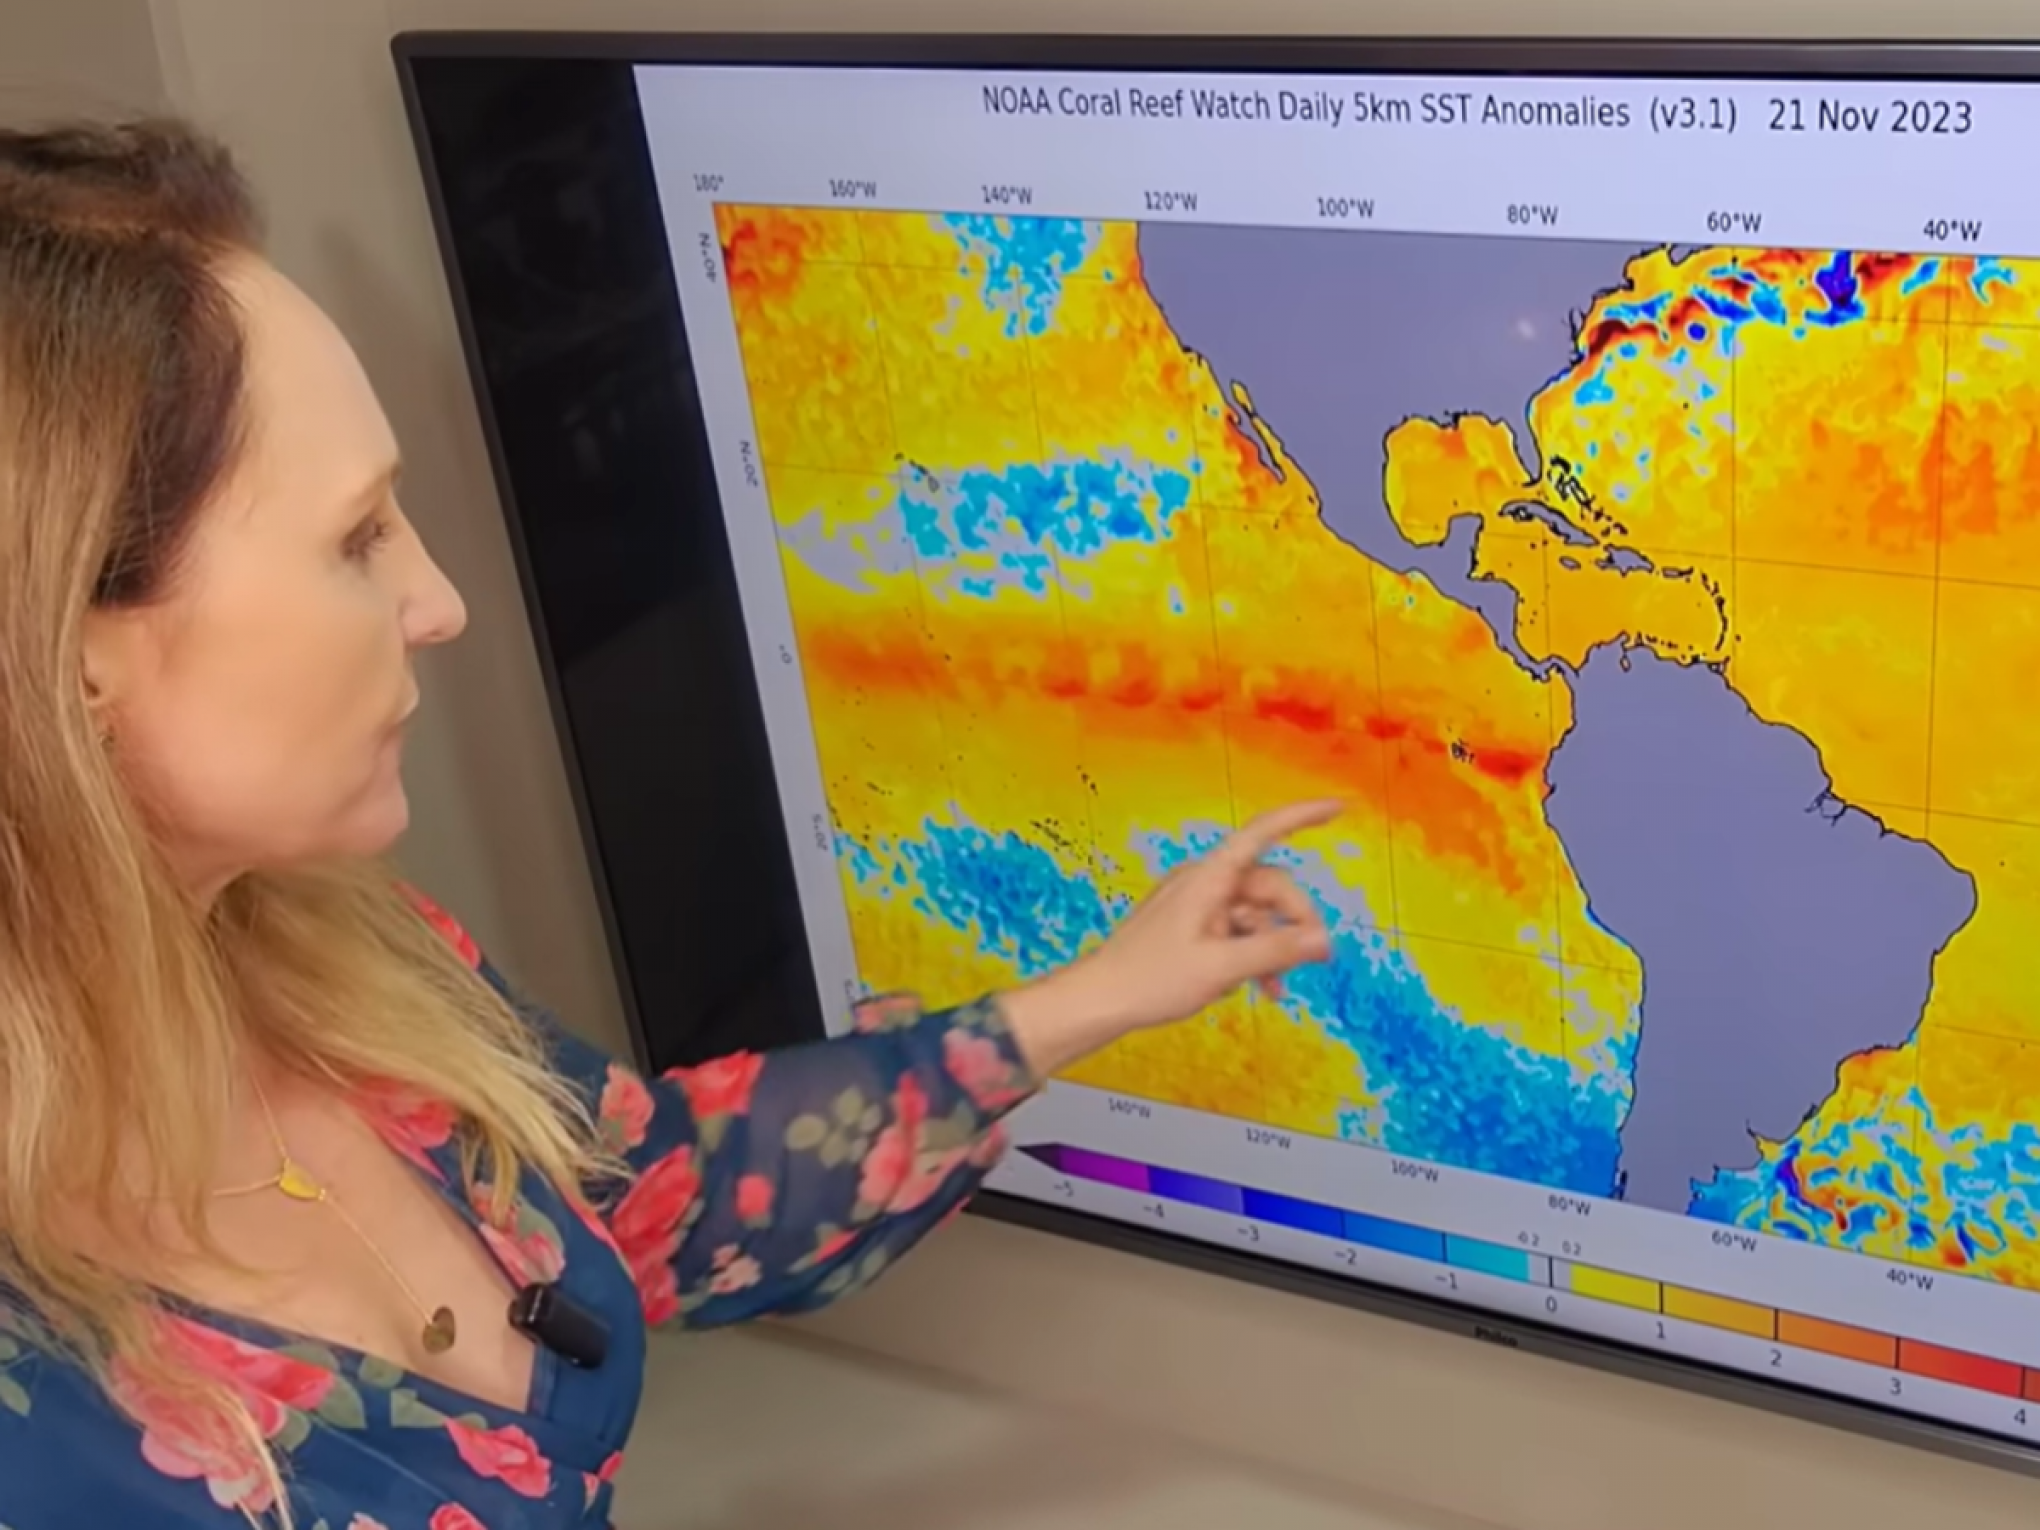 VÍDEO: Dezembro terá um dilúvio por conta do El Niño? Meteorologista Estael Sias responde dúvidas sobre chuvas no RS; assista